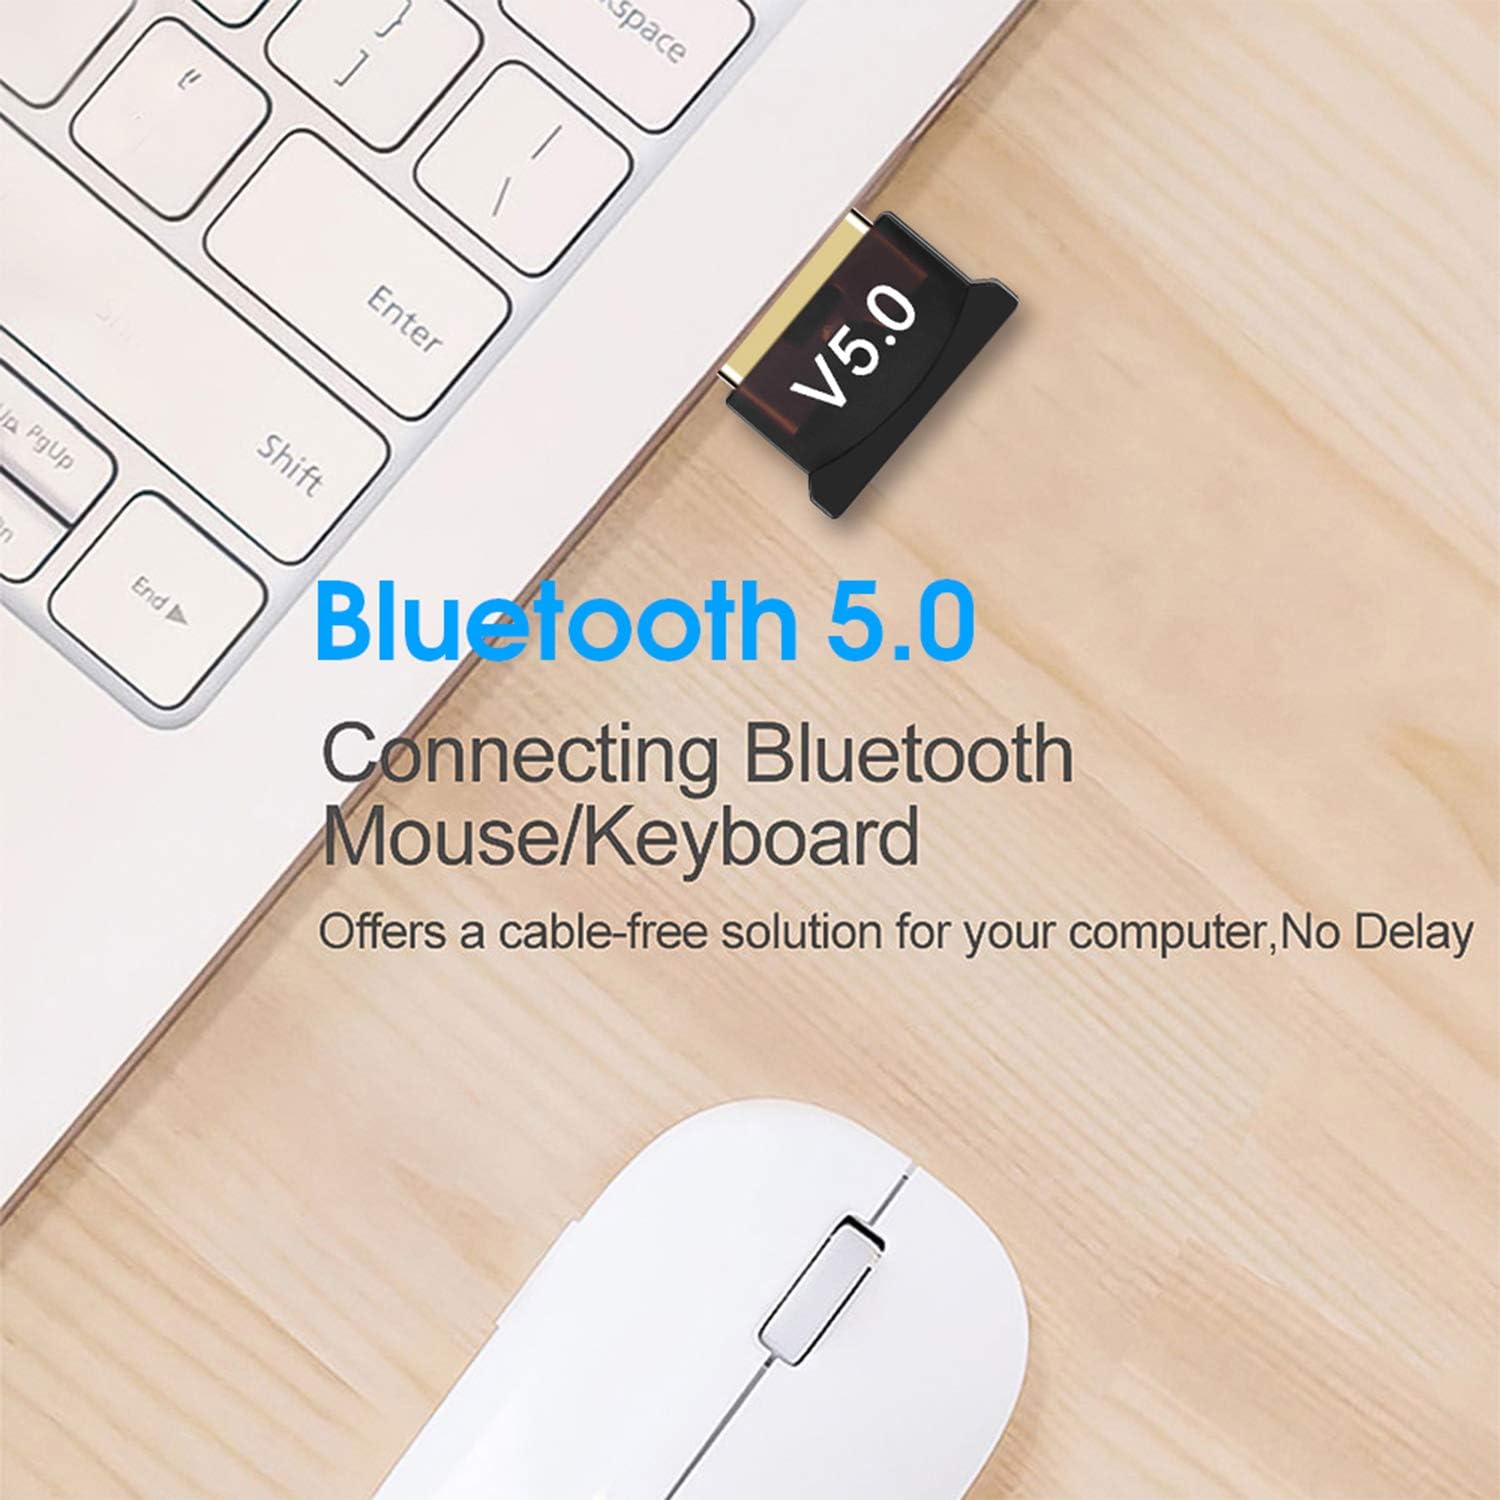 Ultra-Mini Bluetooth CSR 5.0 USB Dongle Adapter for Windows Computer